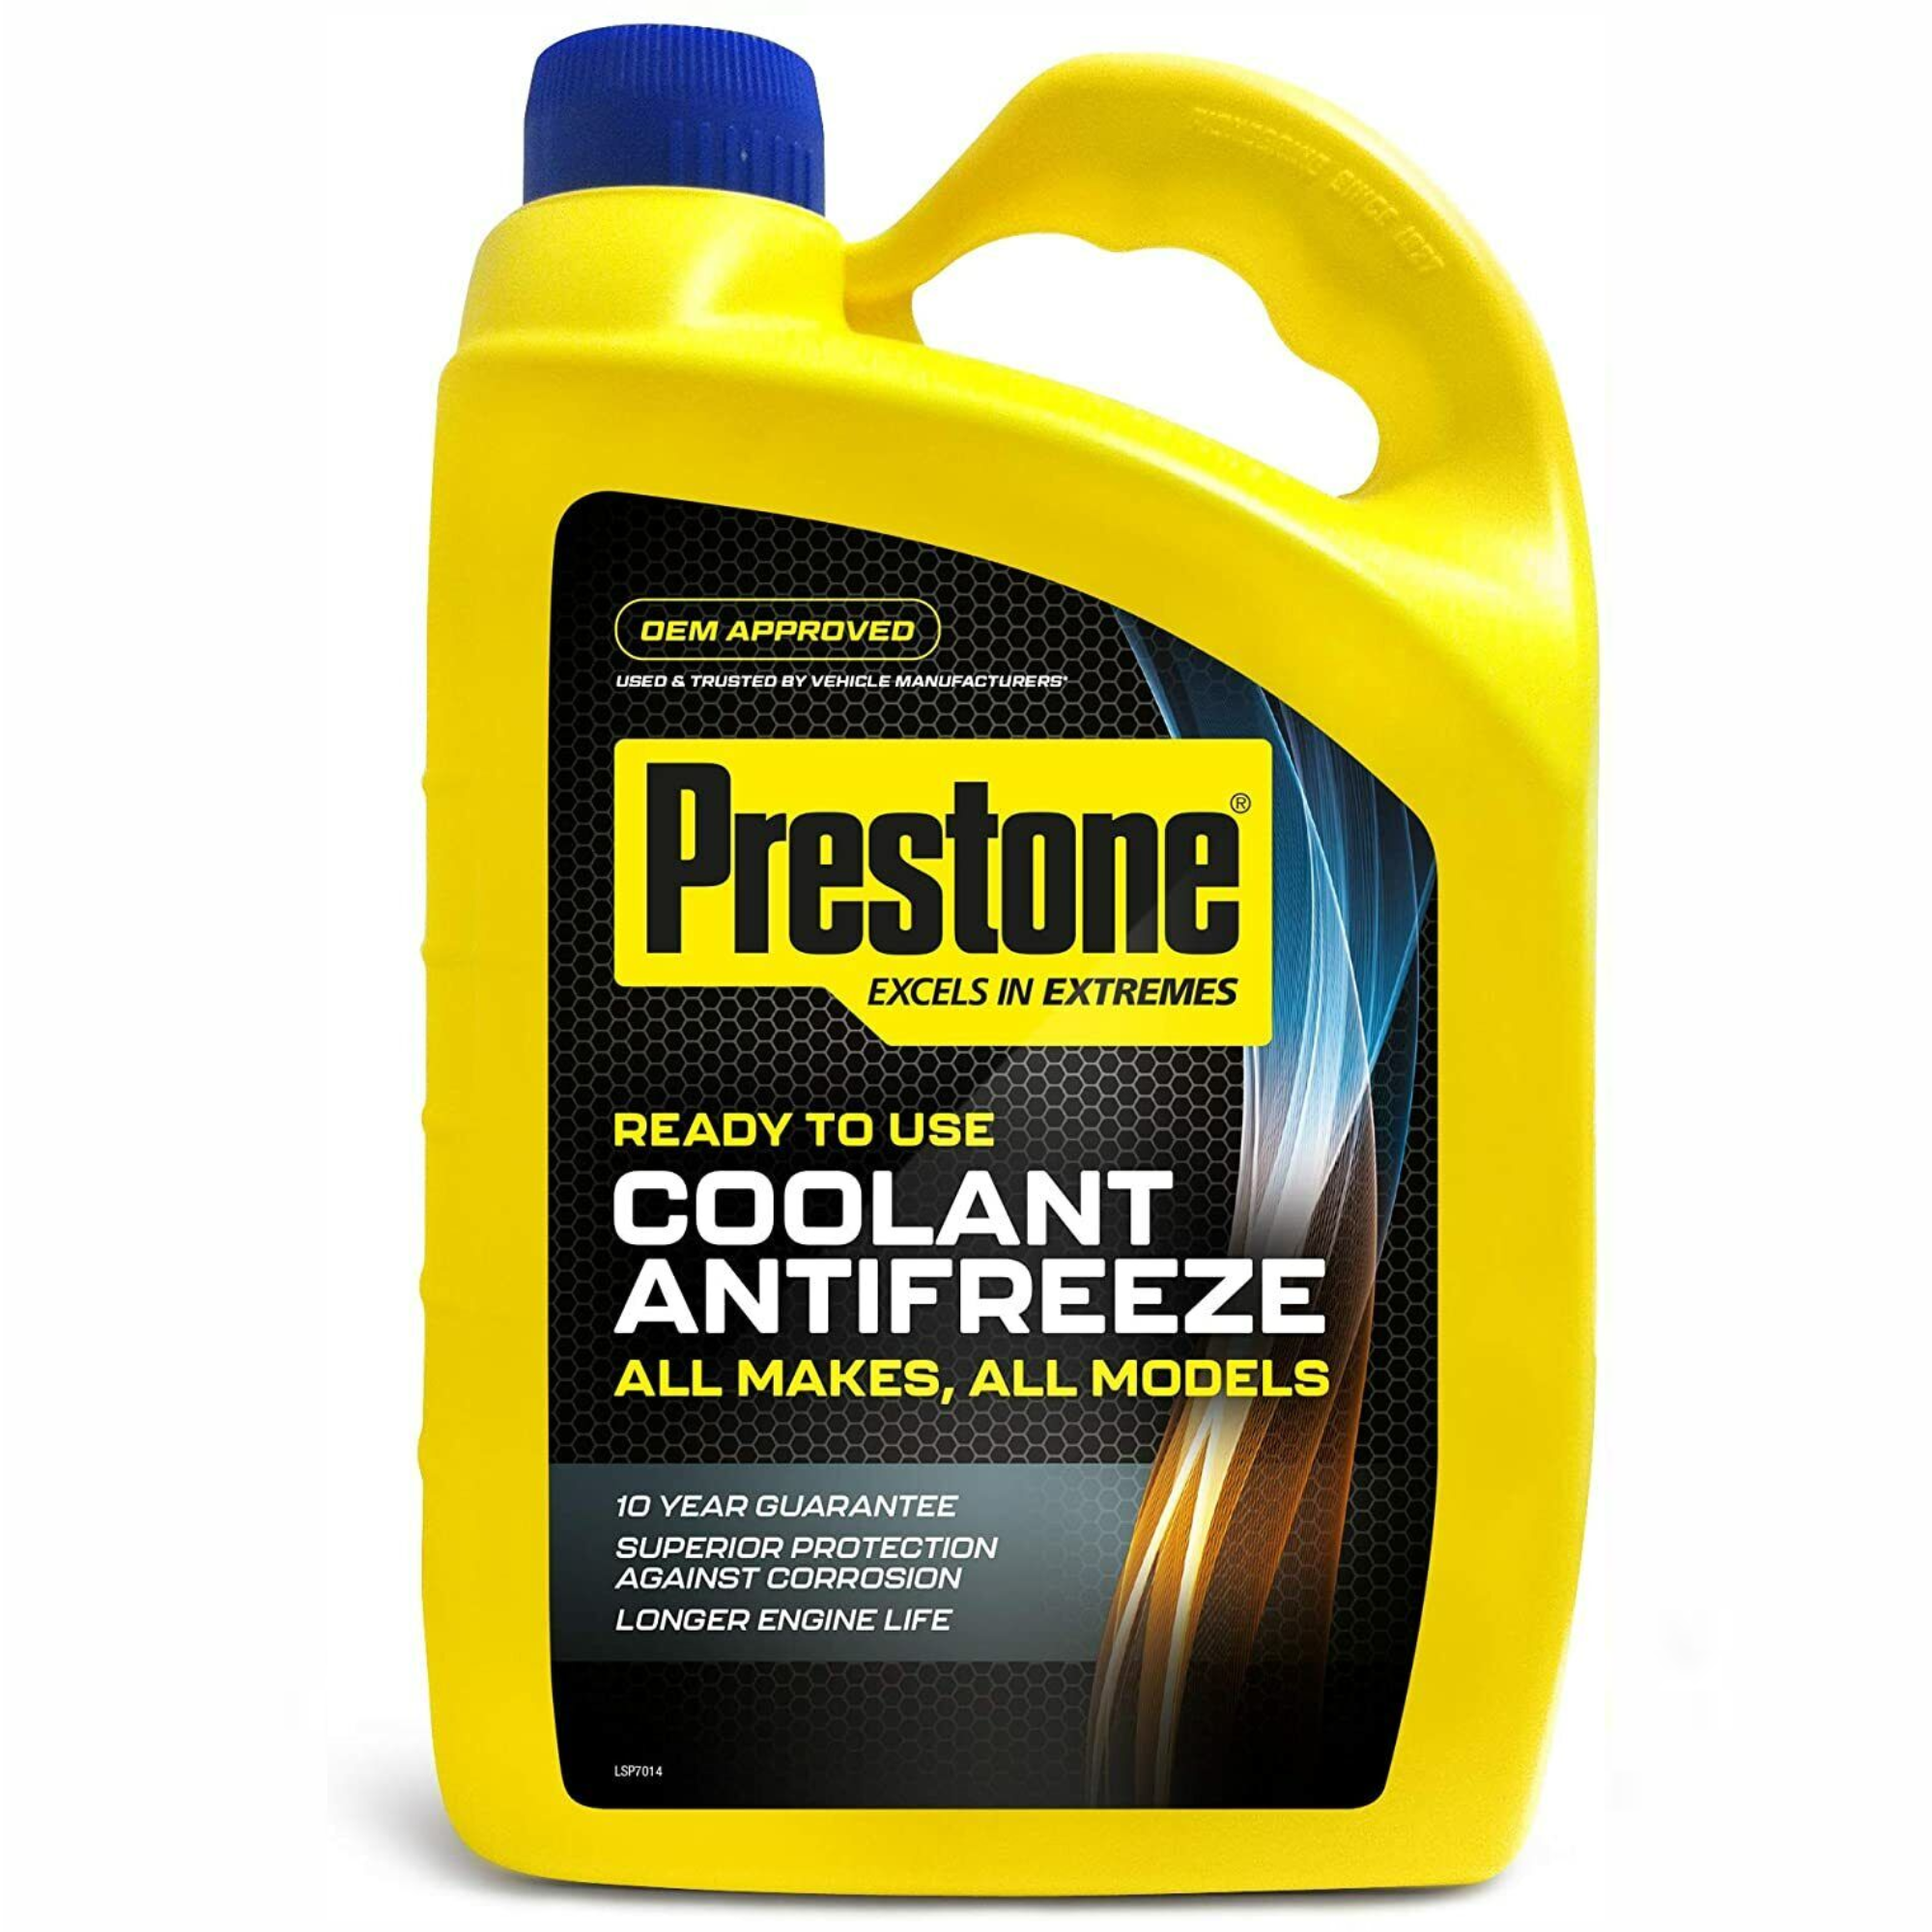 Prestone Coolant/Antifreeze - Ready to Use 4 Litre